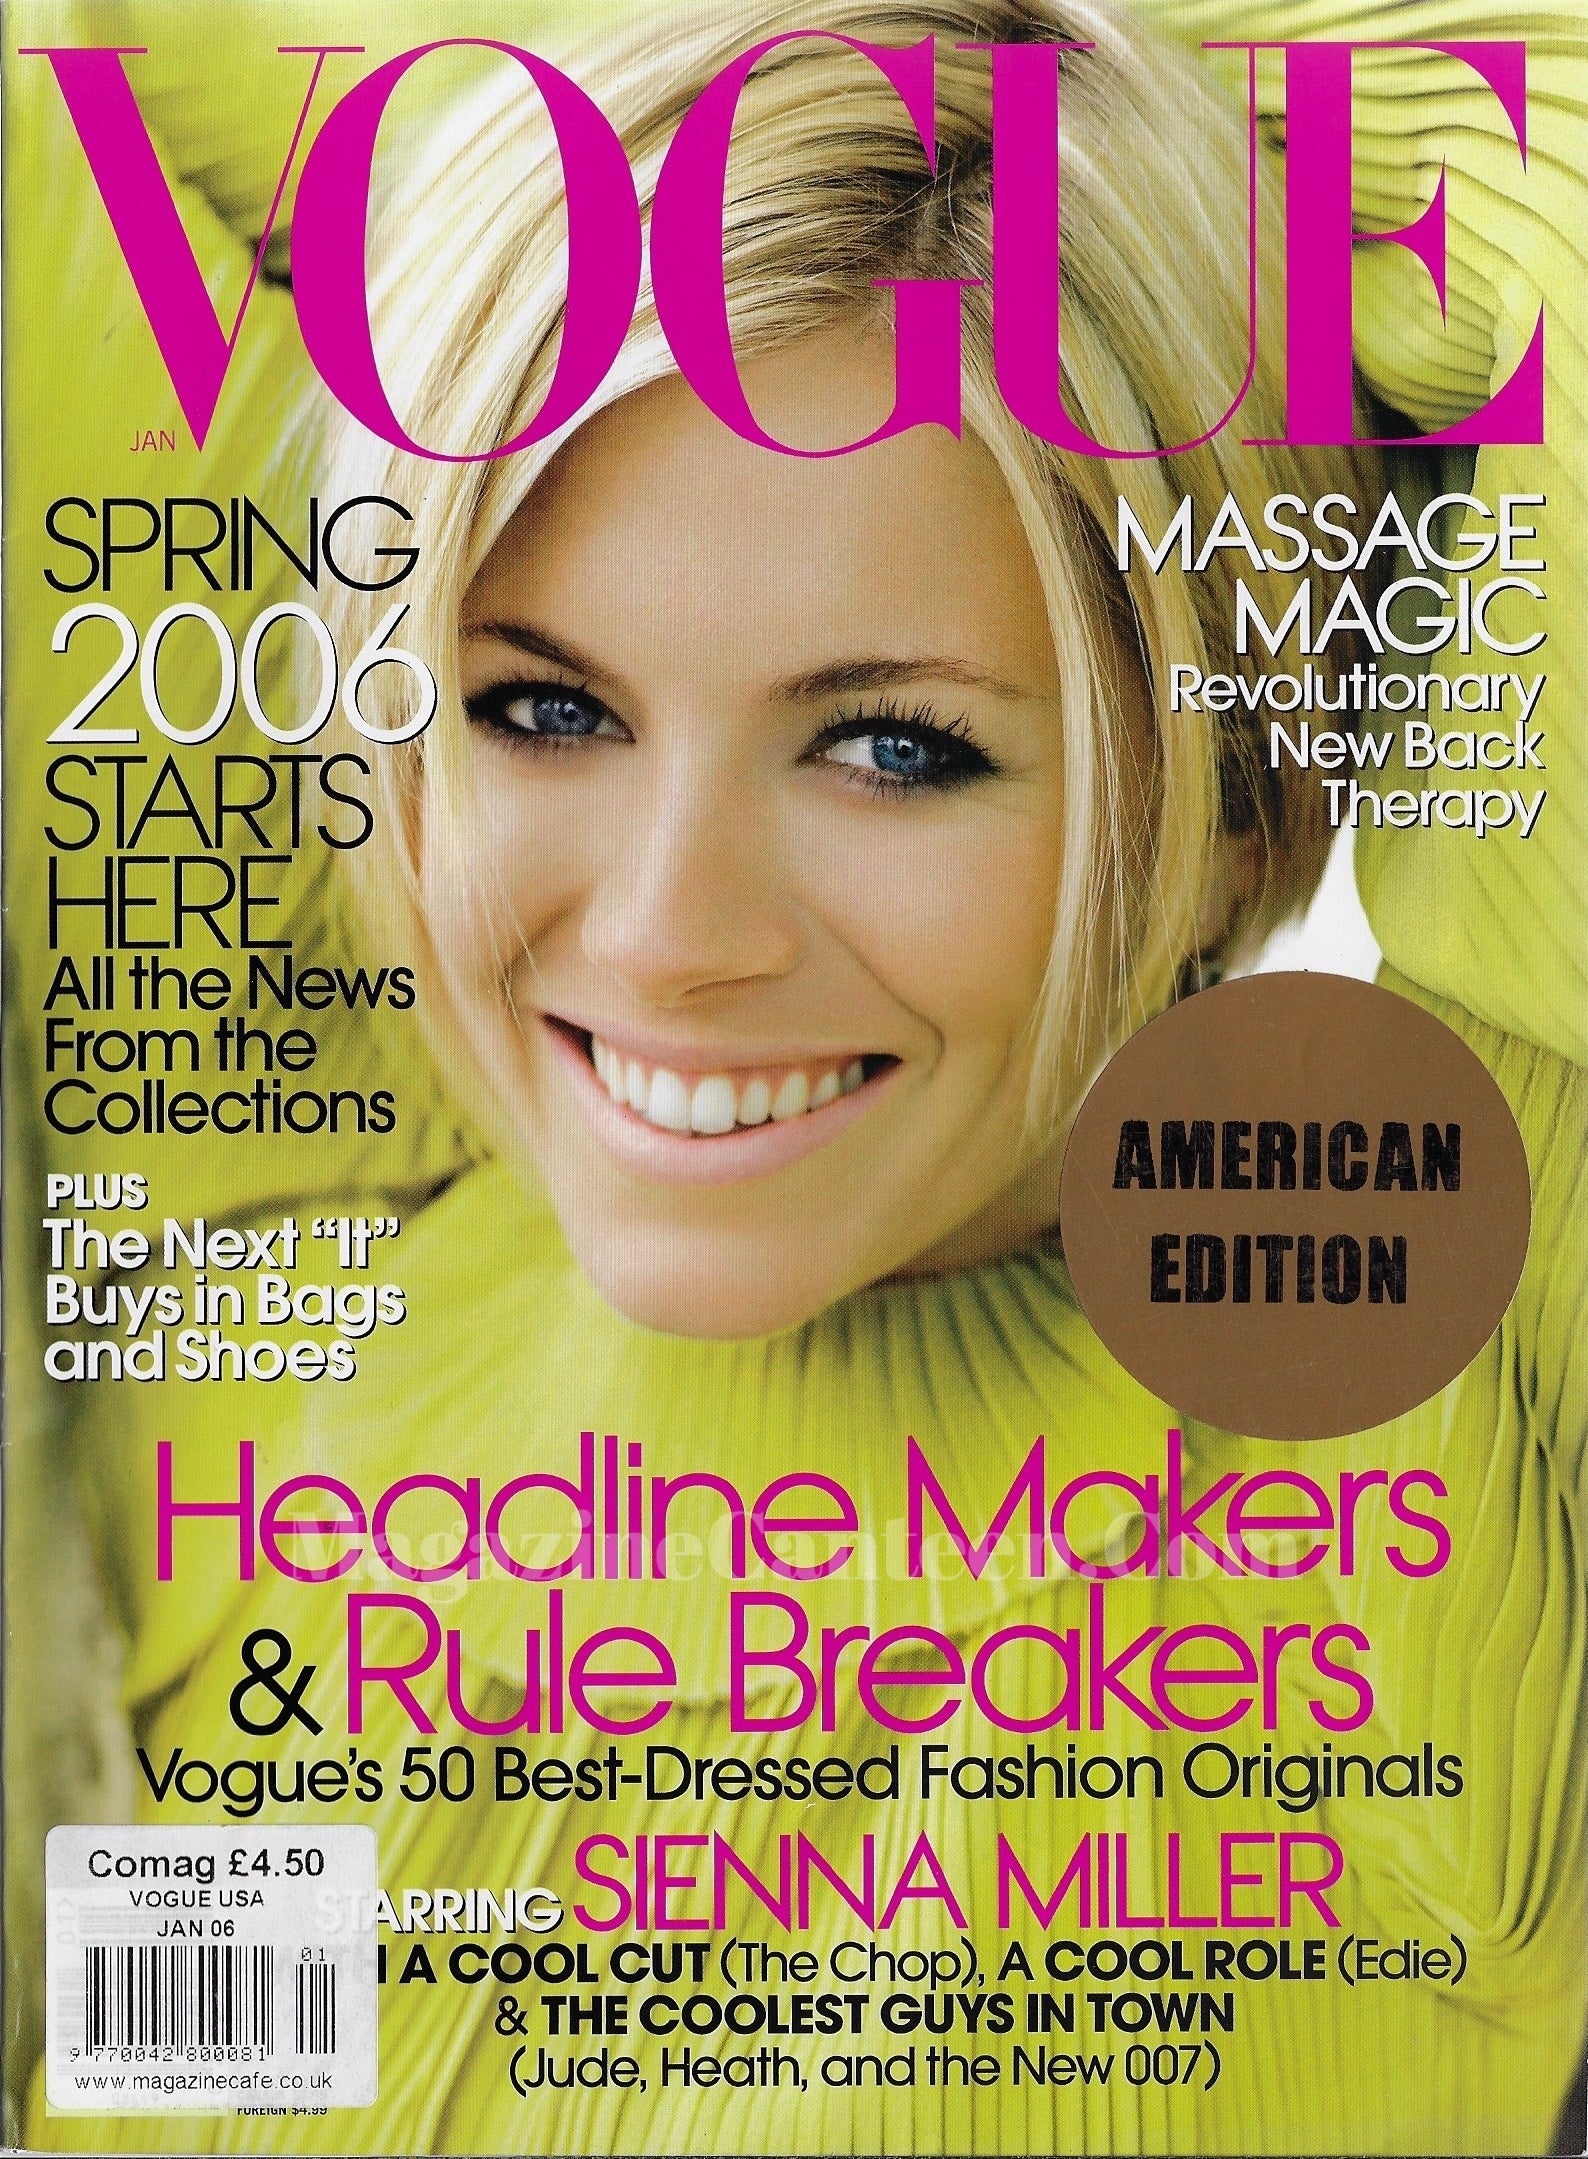 Vogue USA Magazine January 2006 - Sienna Miller